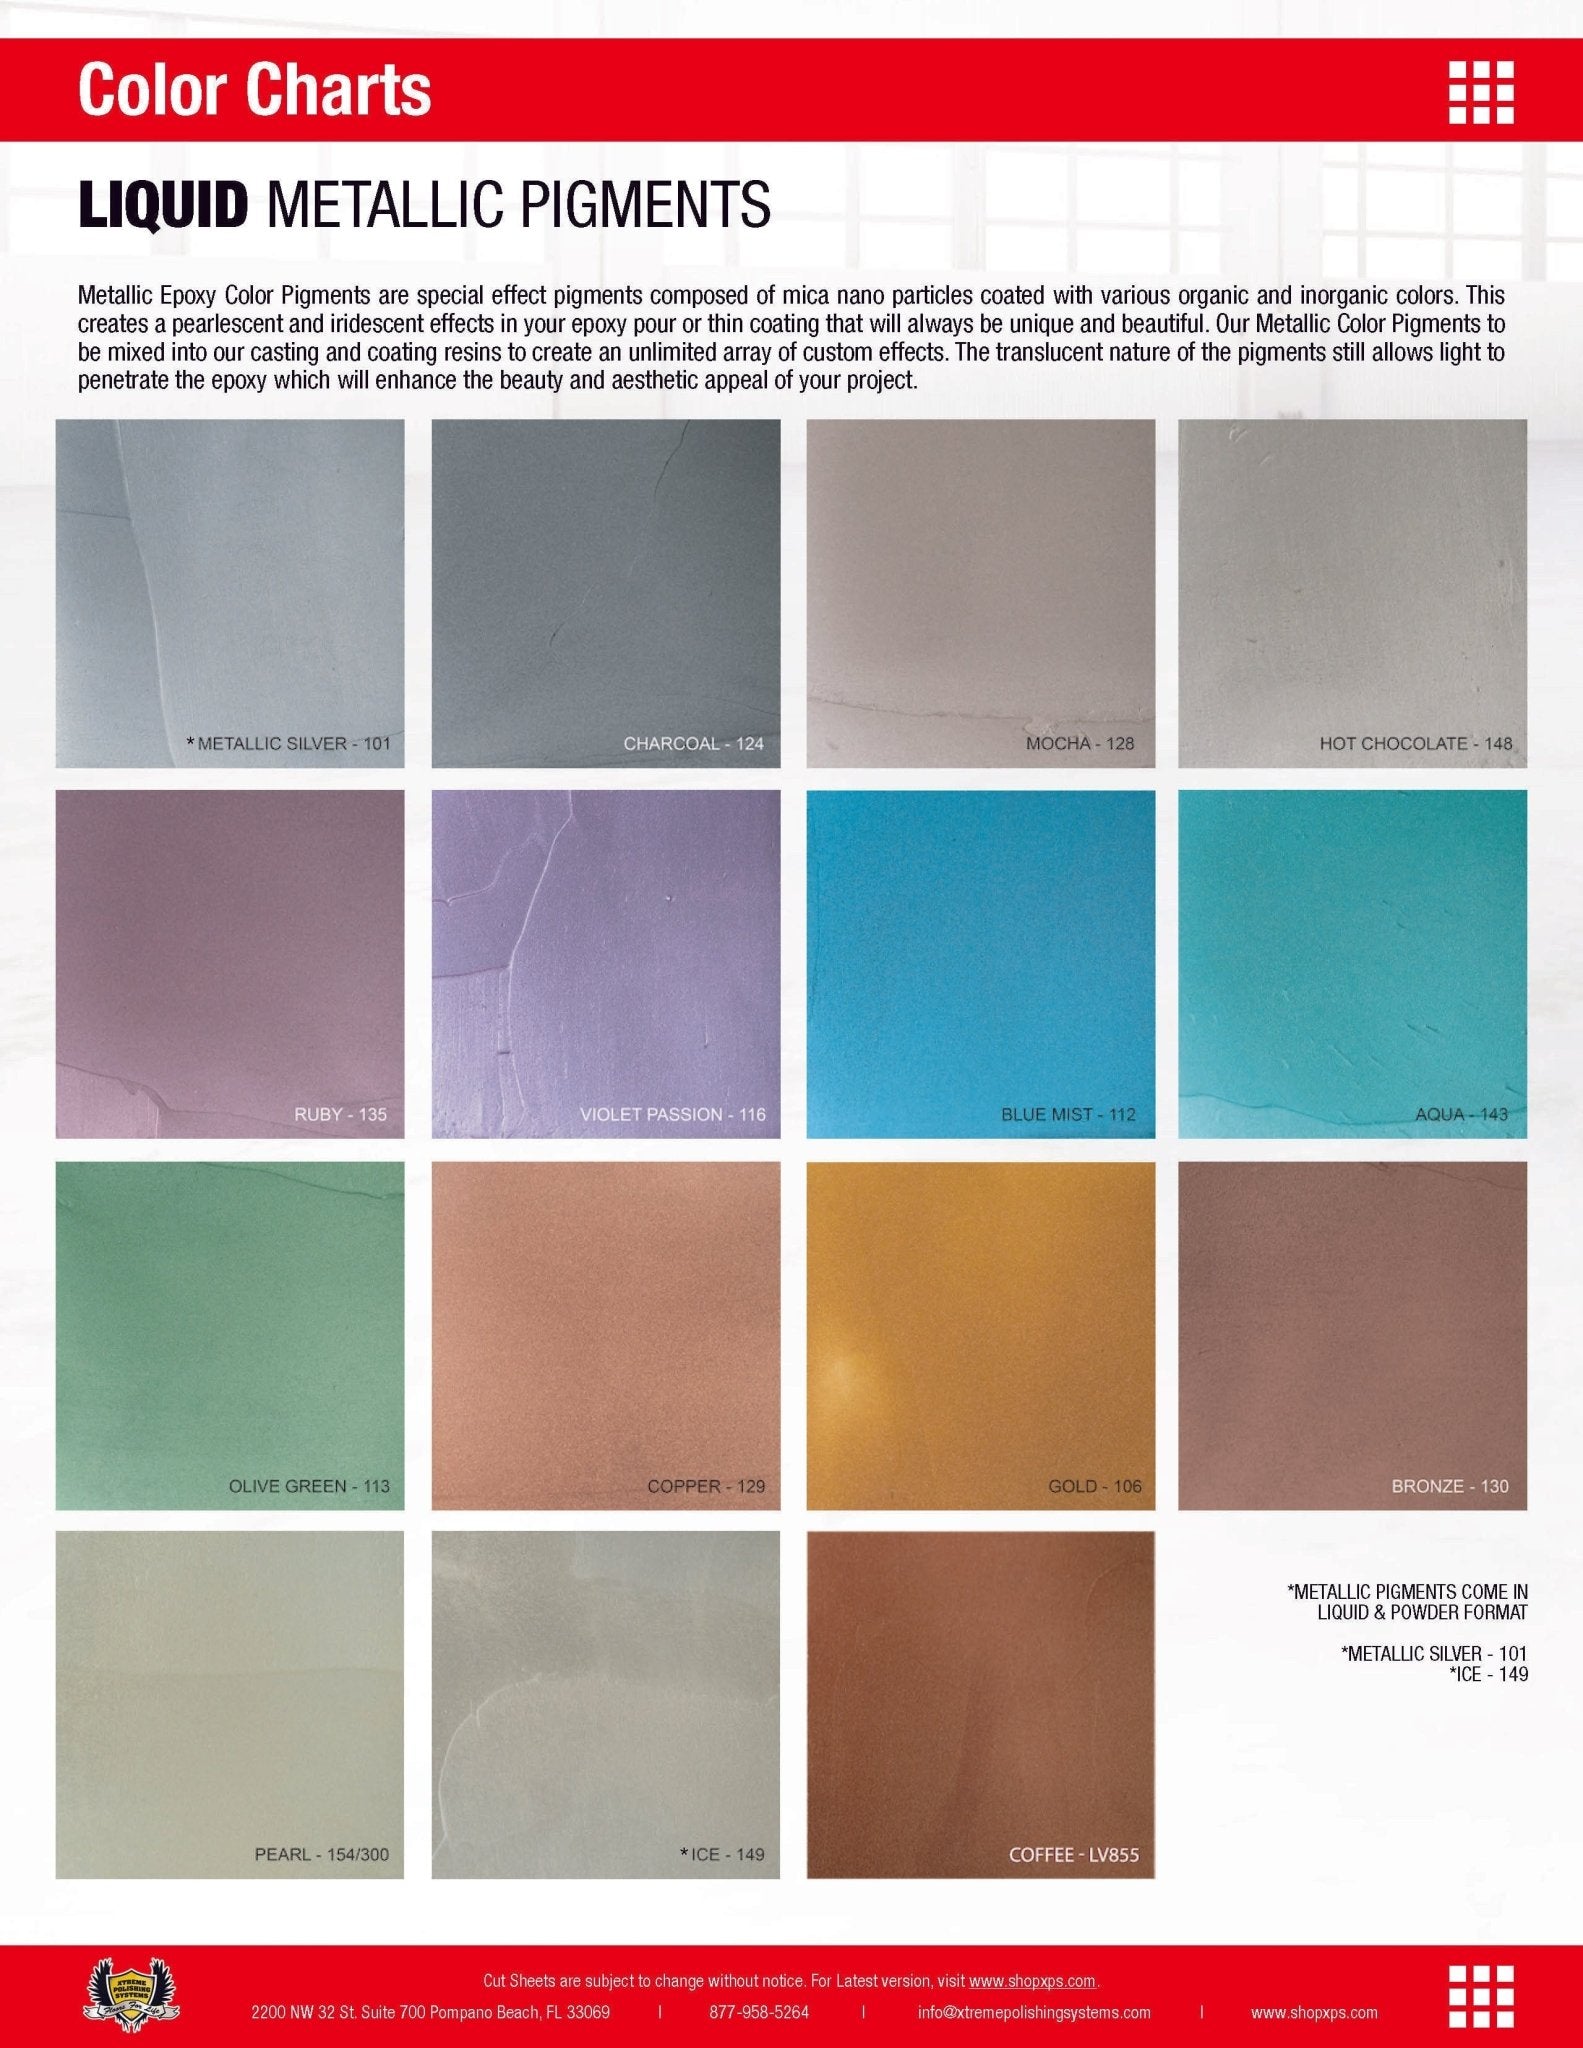 Metallic Epoxy Liquid Pigments Color Chart. Great for metallic epoxy floors - Xtreme Polishing Systems, epoxy colors for concrete, colored epoxy paint, concrete epoxy colors.